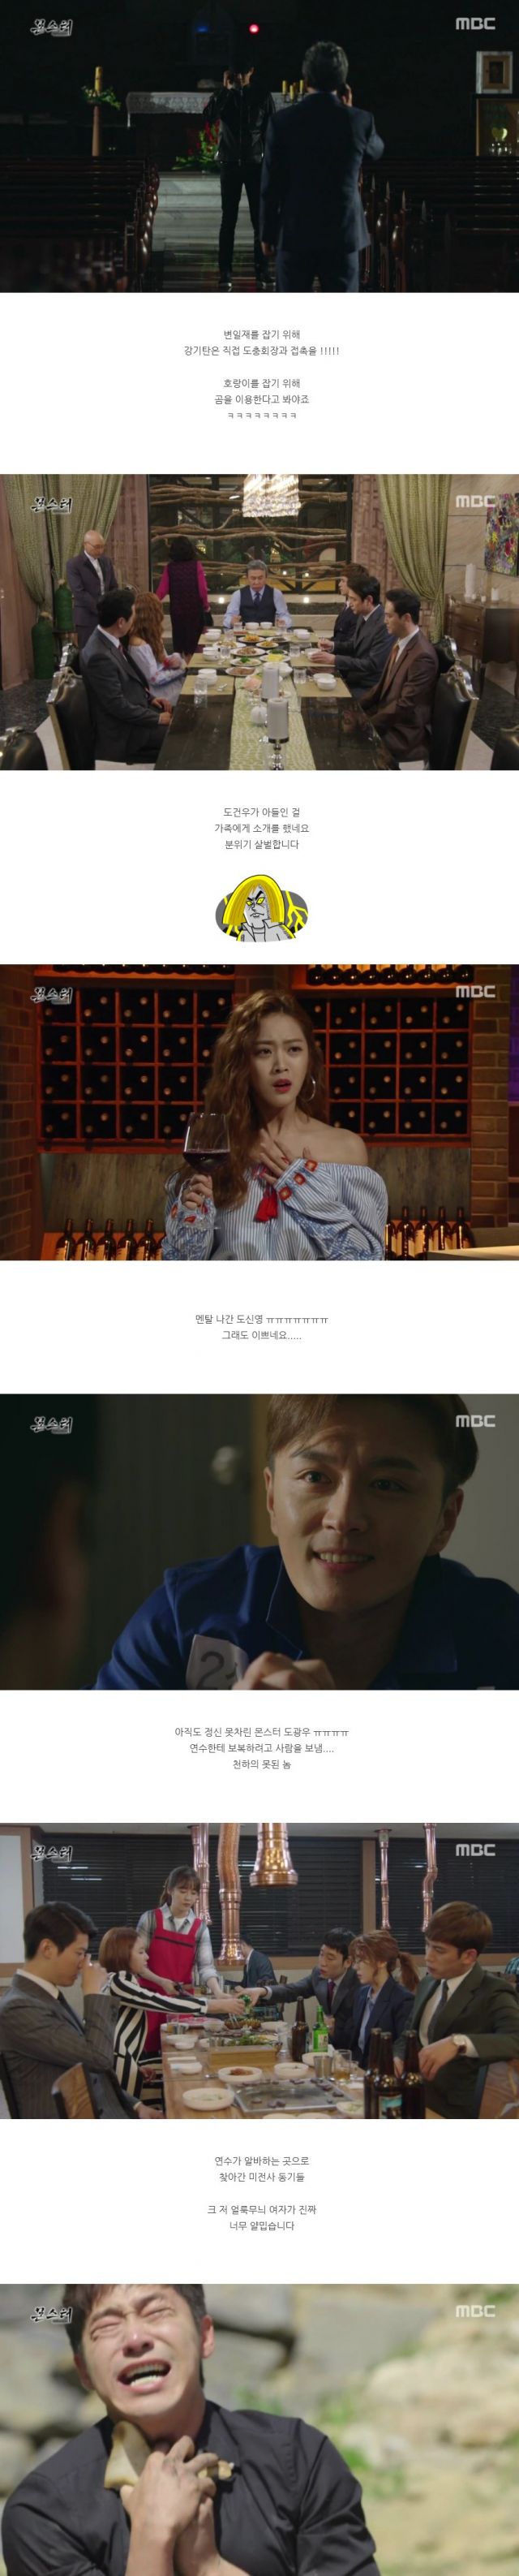 episode 16 captures for the Korean drama 'Monster - 2016'